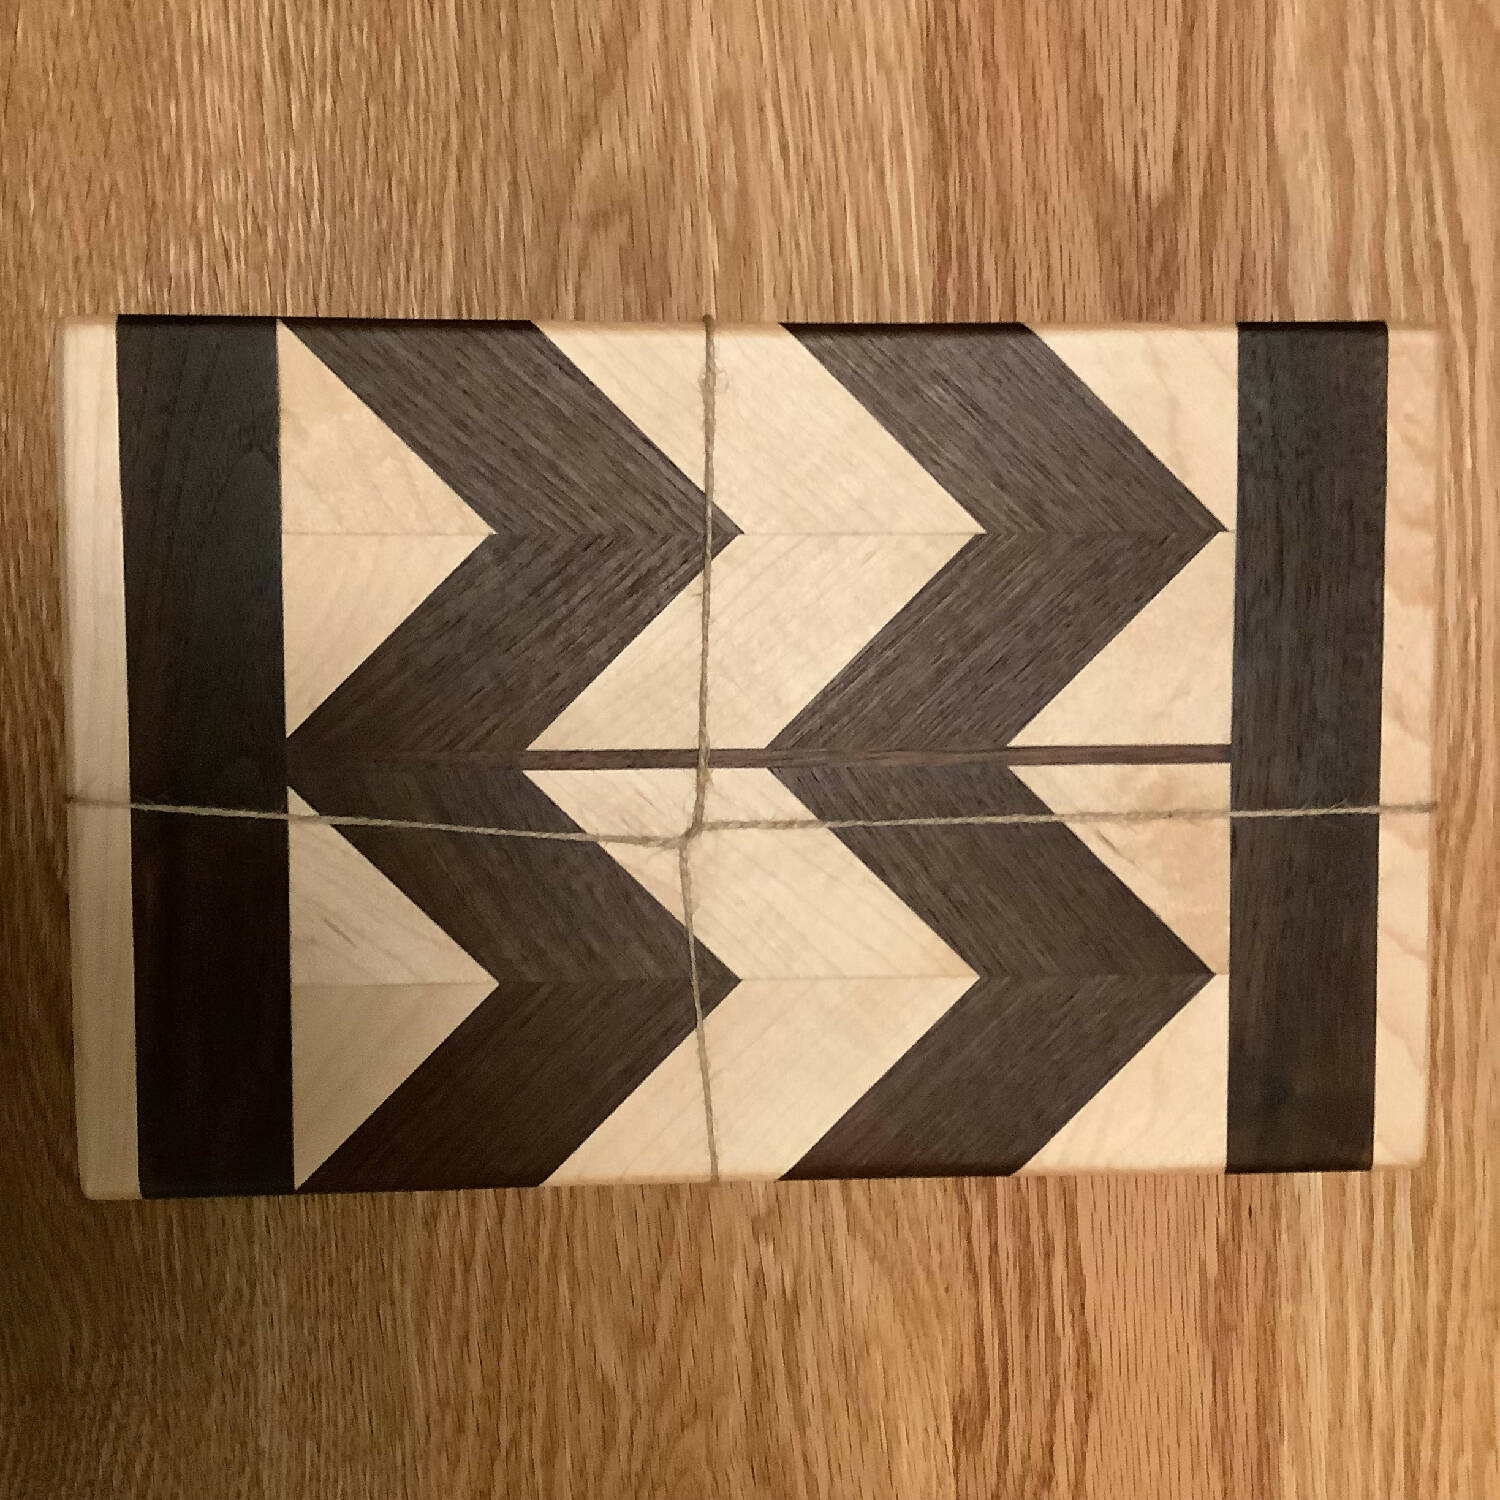 12” x 7.5” chevron pattern walnut and maple cutting board